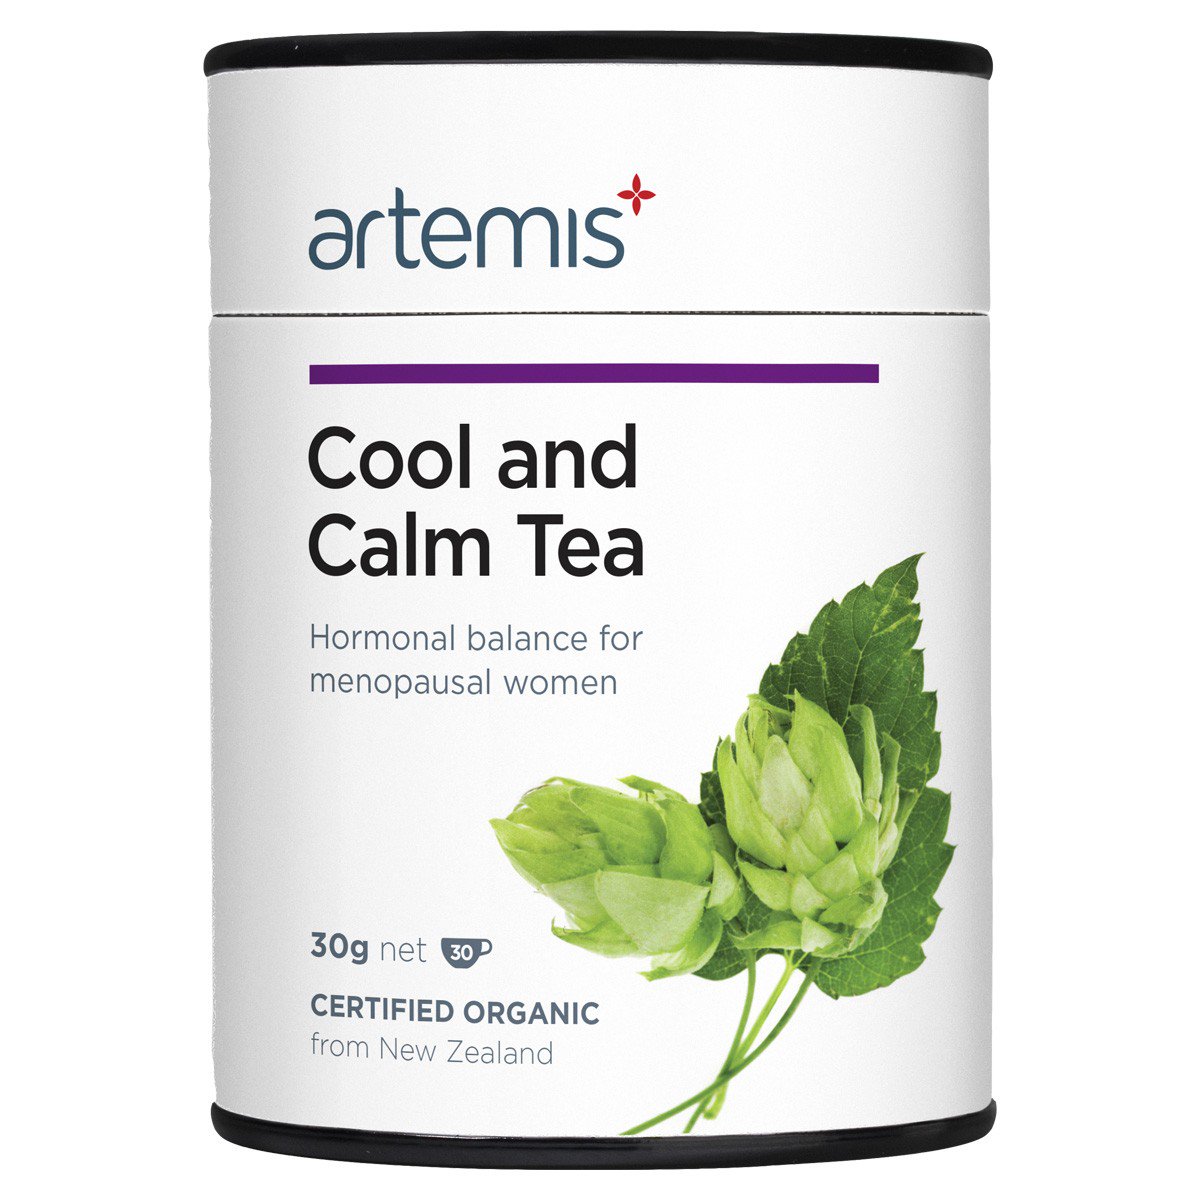 Artemis cool and calm tea